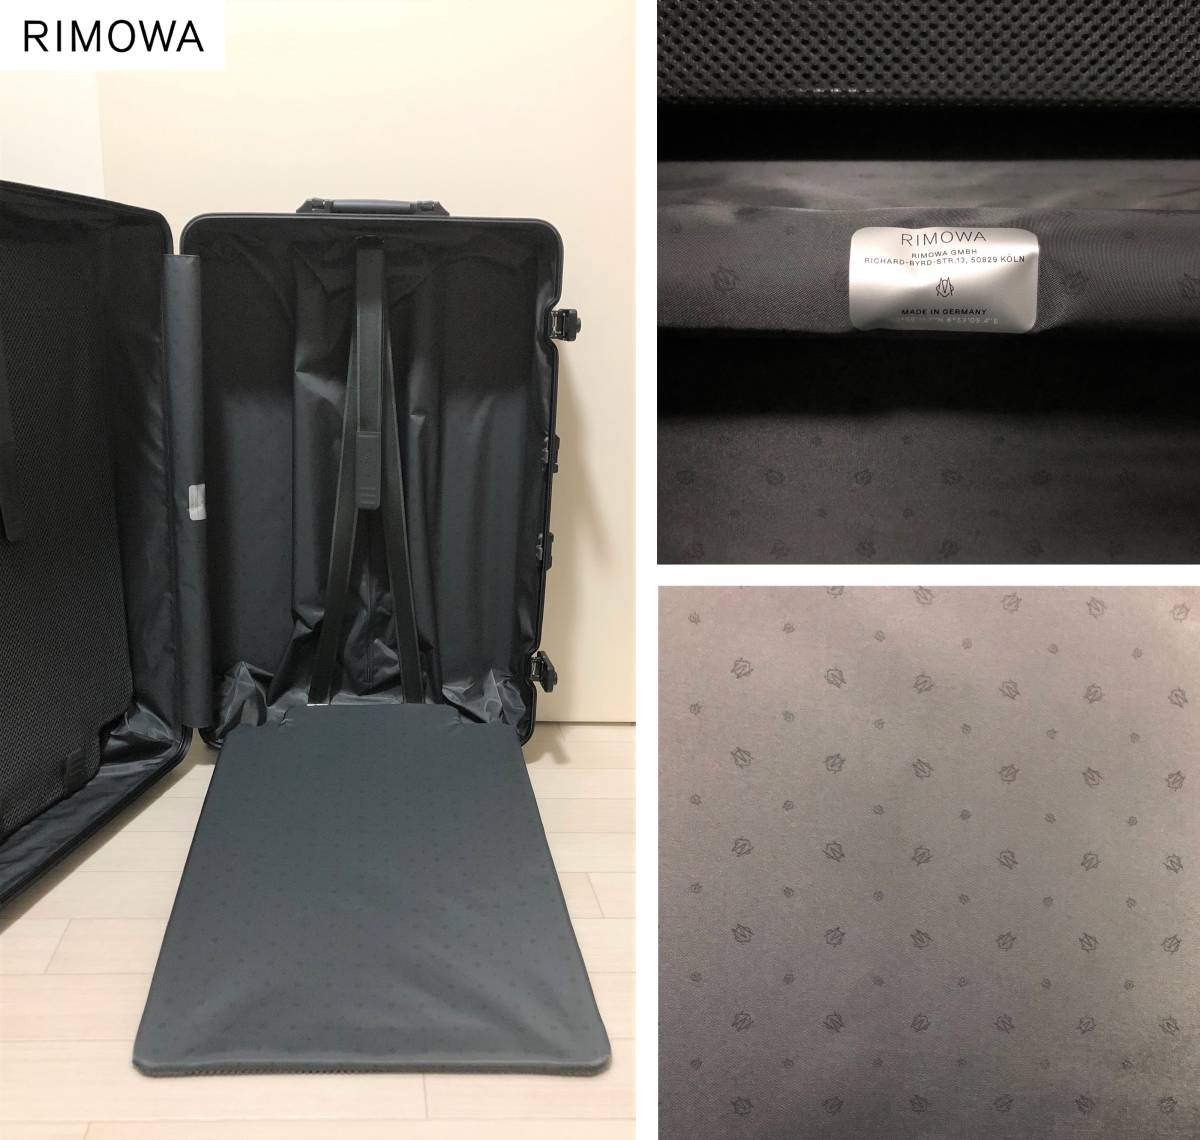 RIMOWA リモワ ORIGINAL Check-In L オリジナル チェックイン L スーツケース 容量86L BLACK ブラック